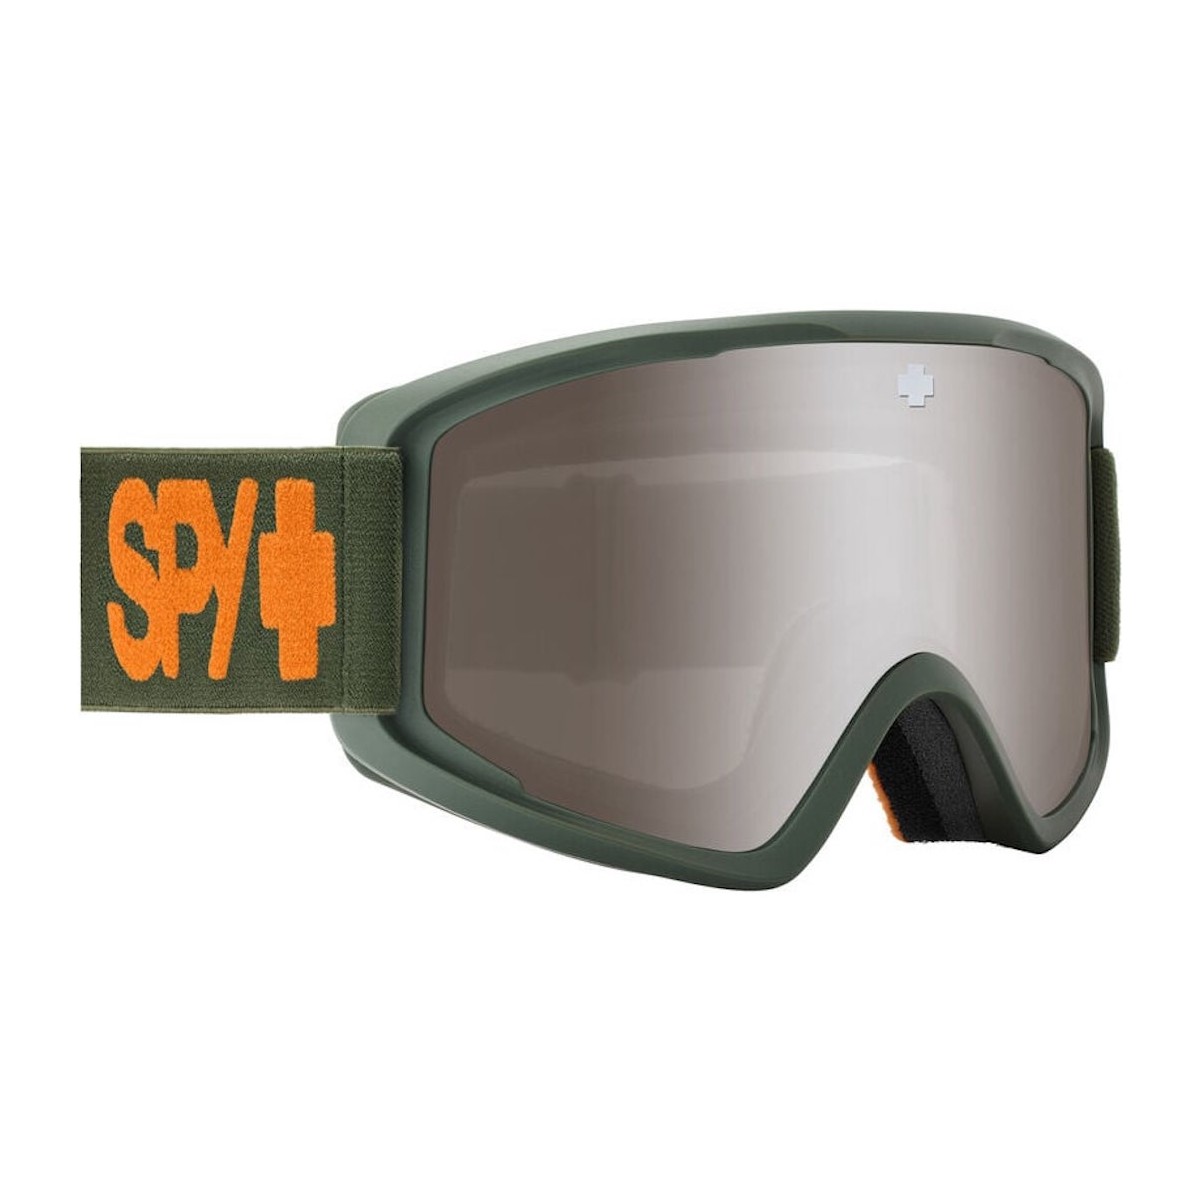 SPY CRUSHER ELITE JR SNOW goggles - matte steel green